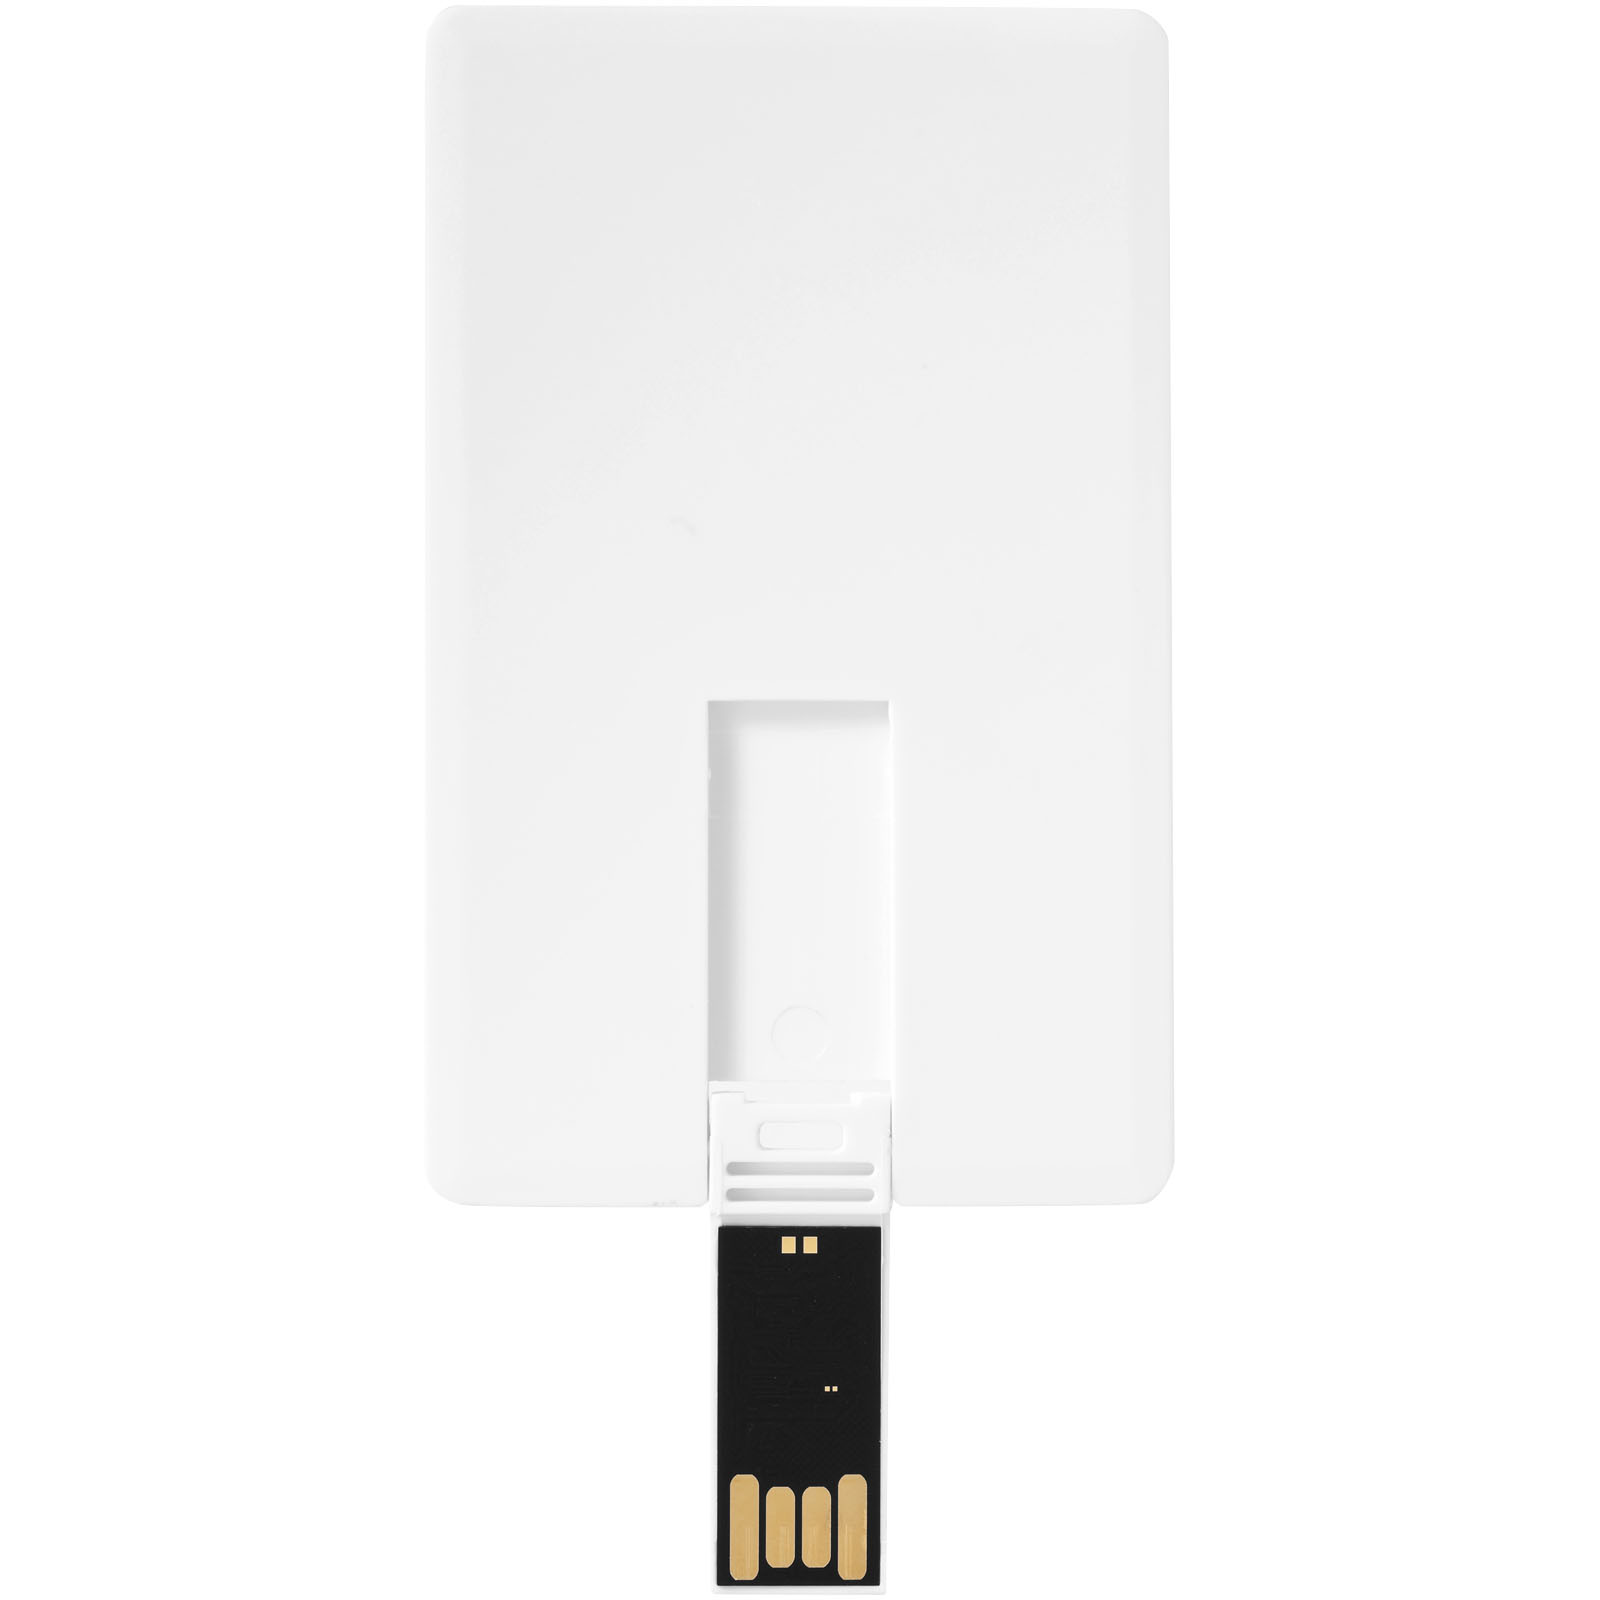 Advertising USB Flash Drives - Slim card-shaped 4GB USB flash drive - 2